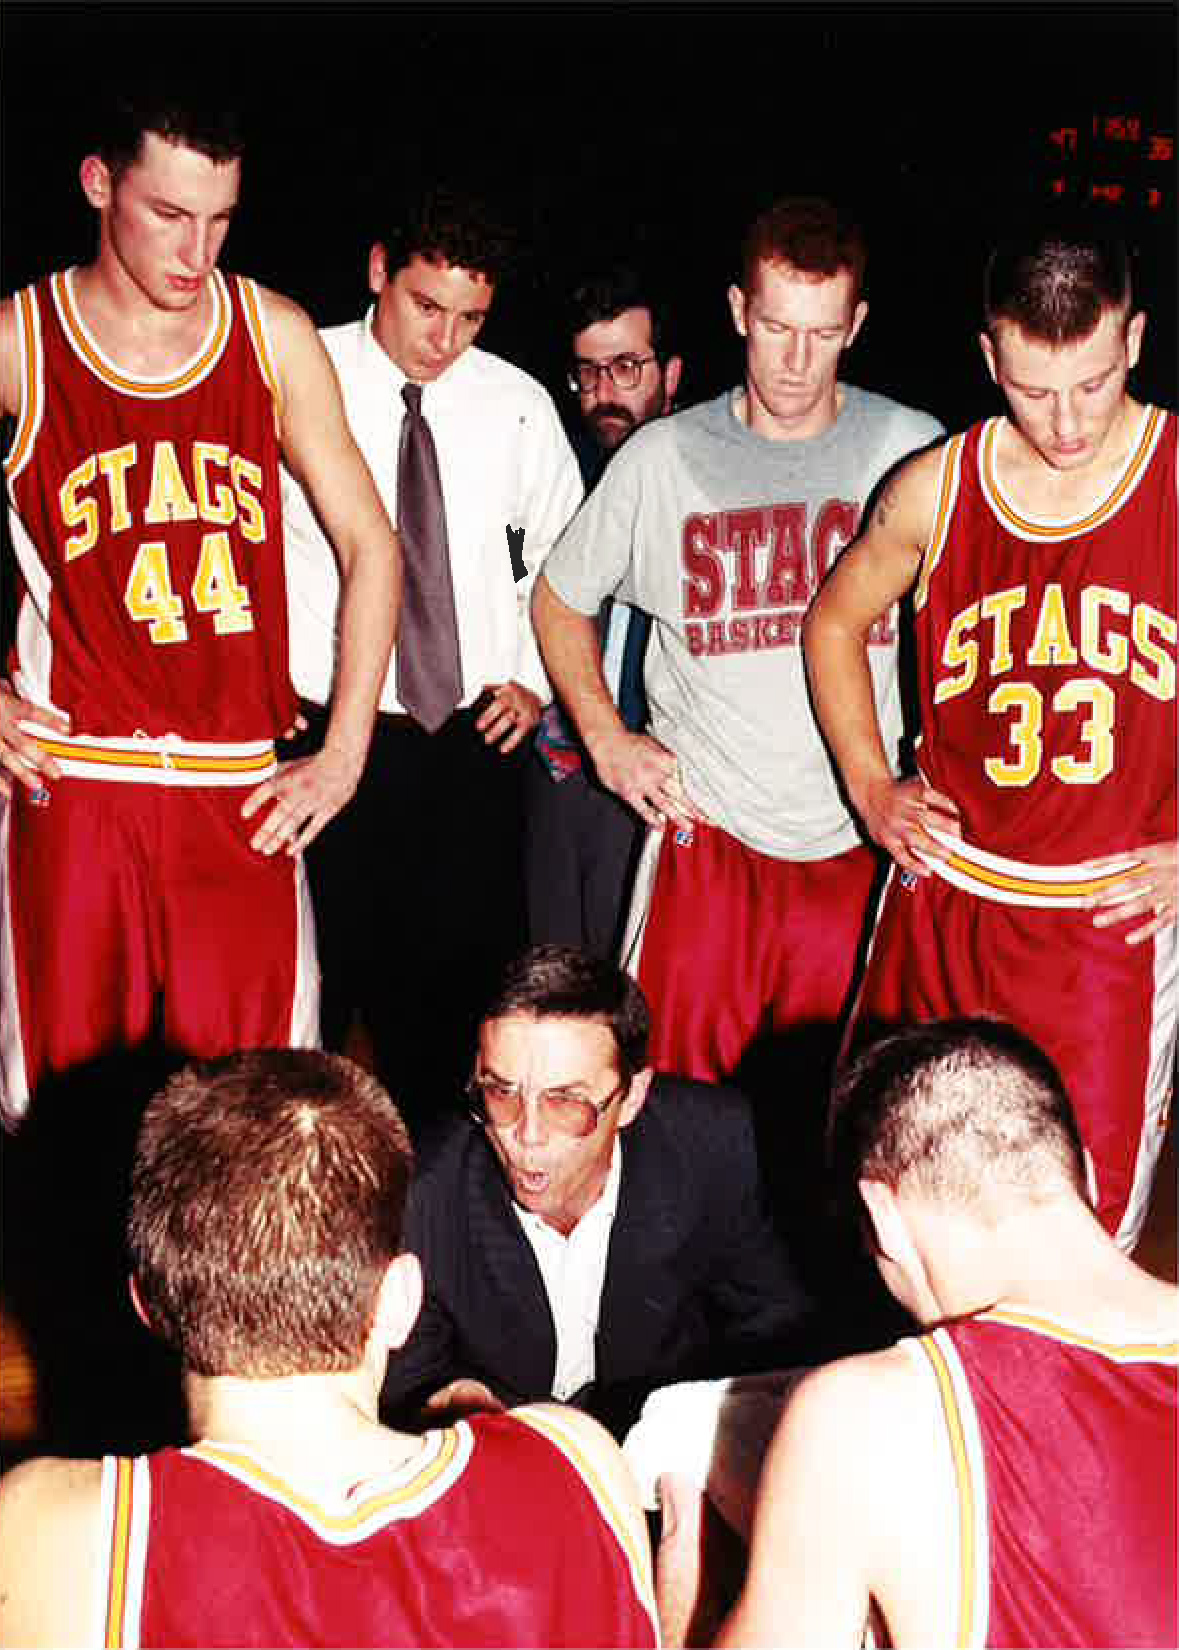 David Wells coaching in a team huddle